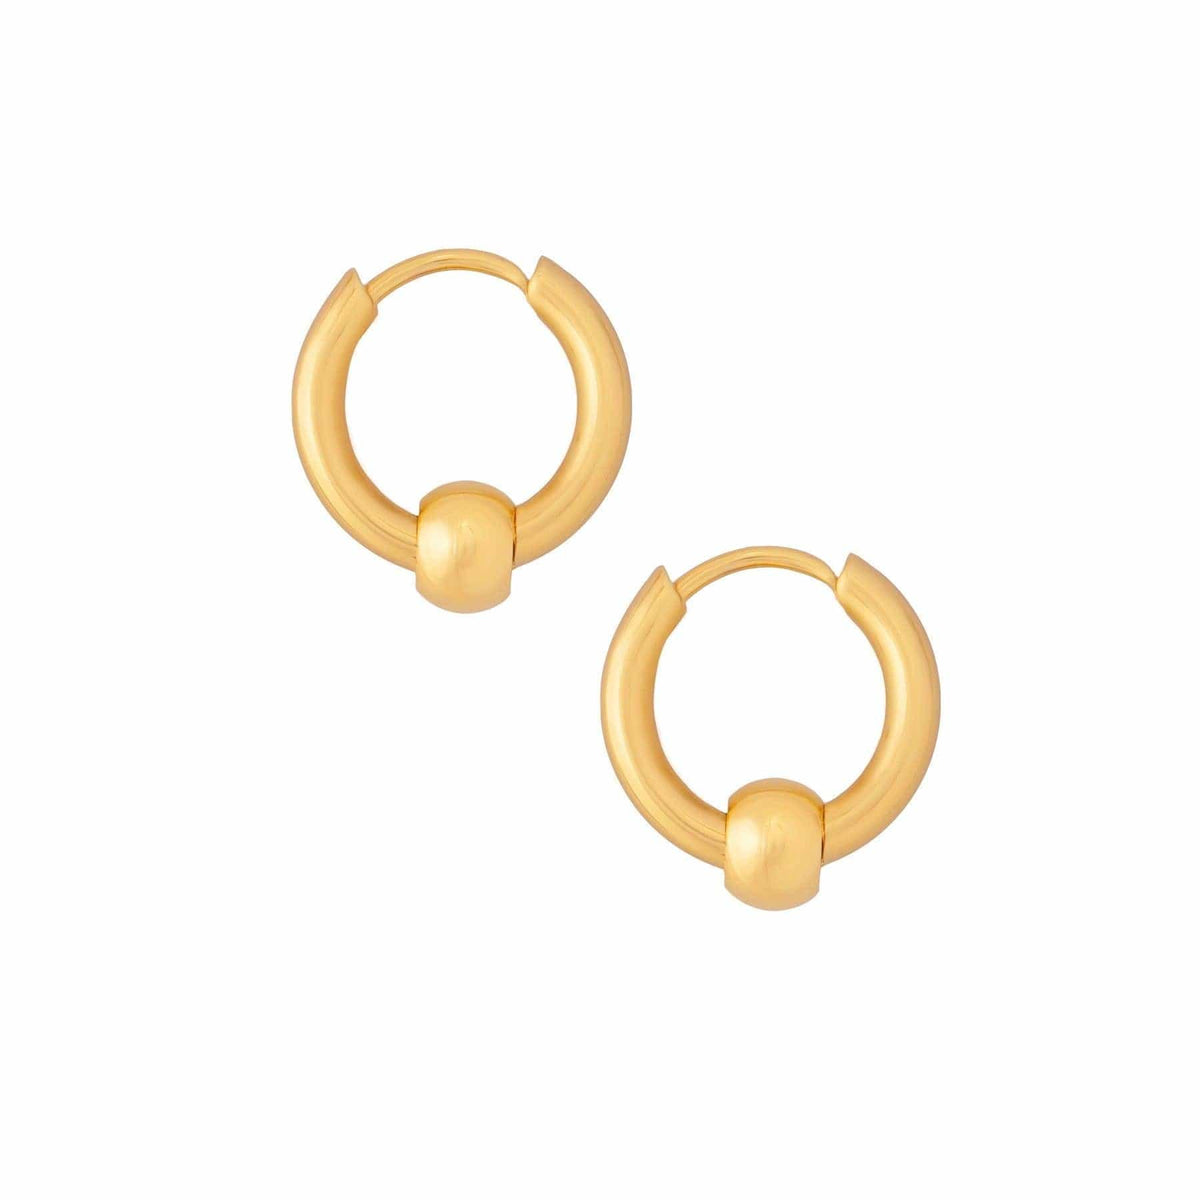 BohoMoon Stainless Steel Odette Hoop Earrings Gold